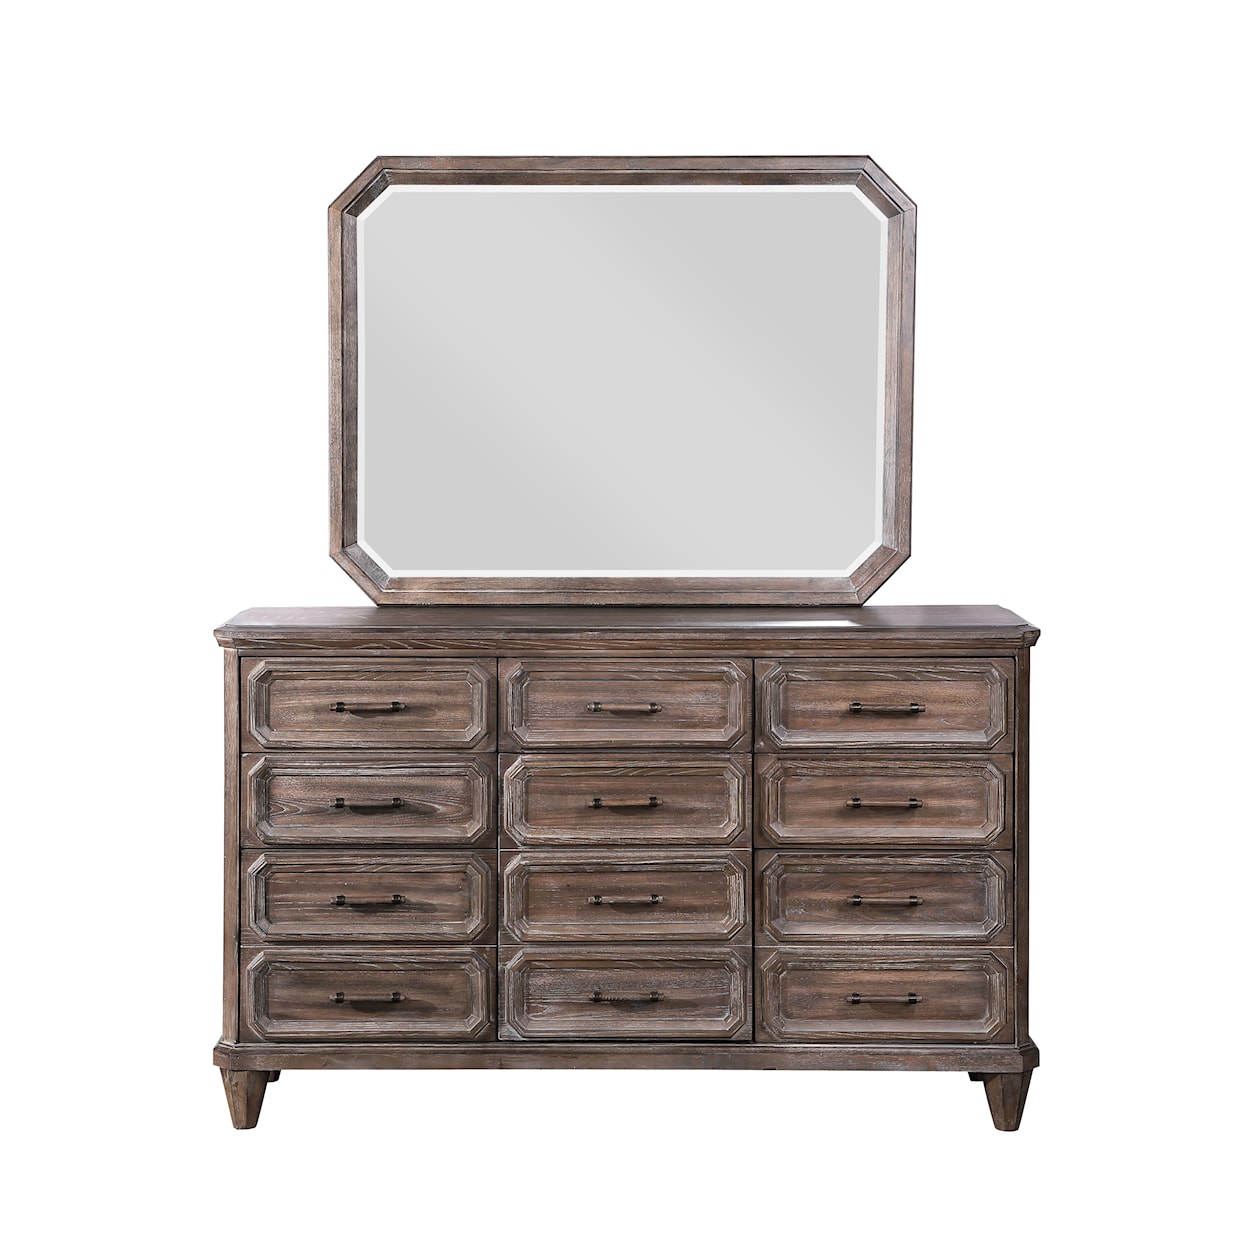 New Classic Furniture Lincoln Park Drawer Dresser